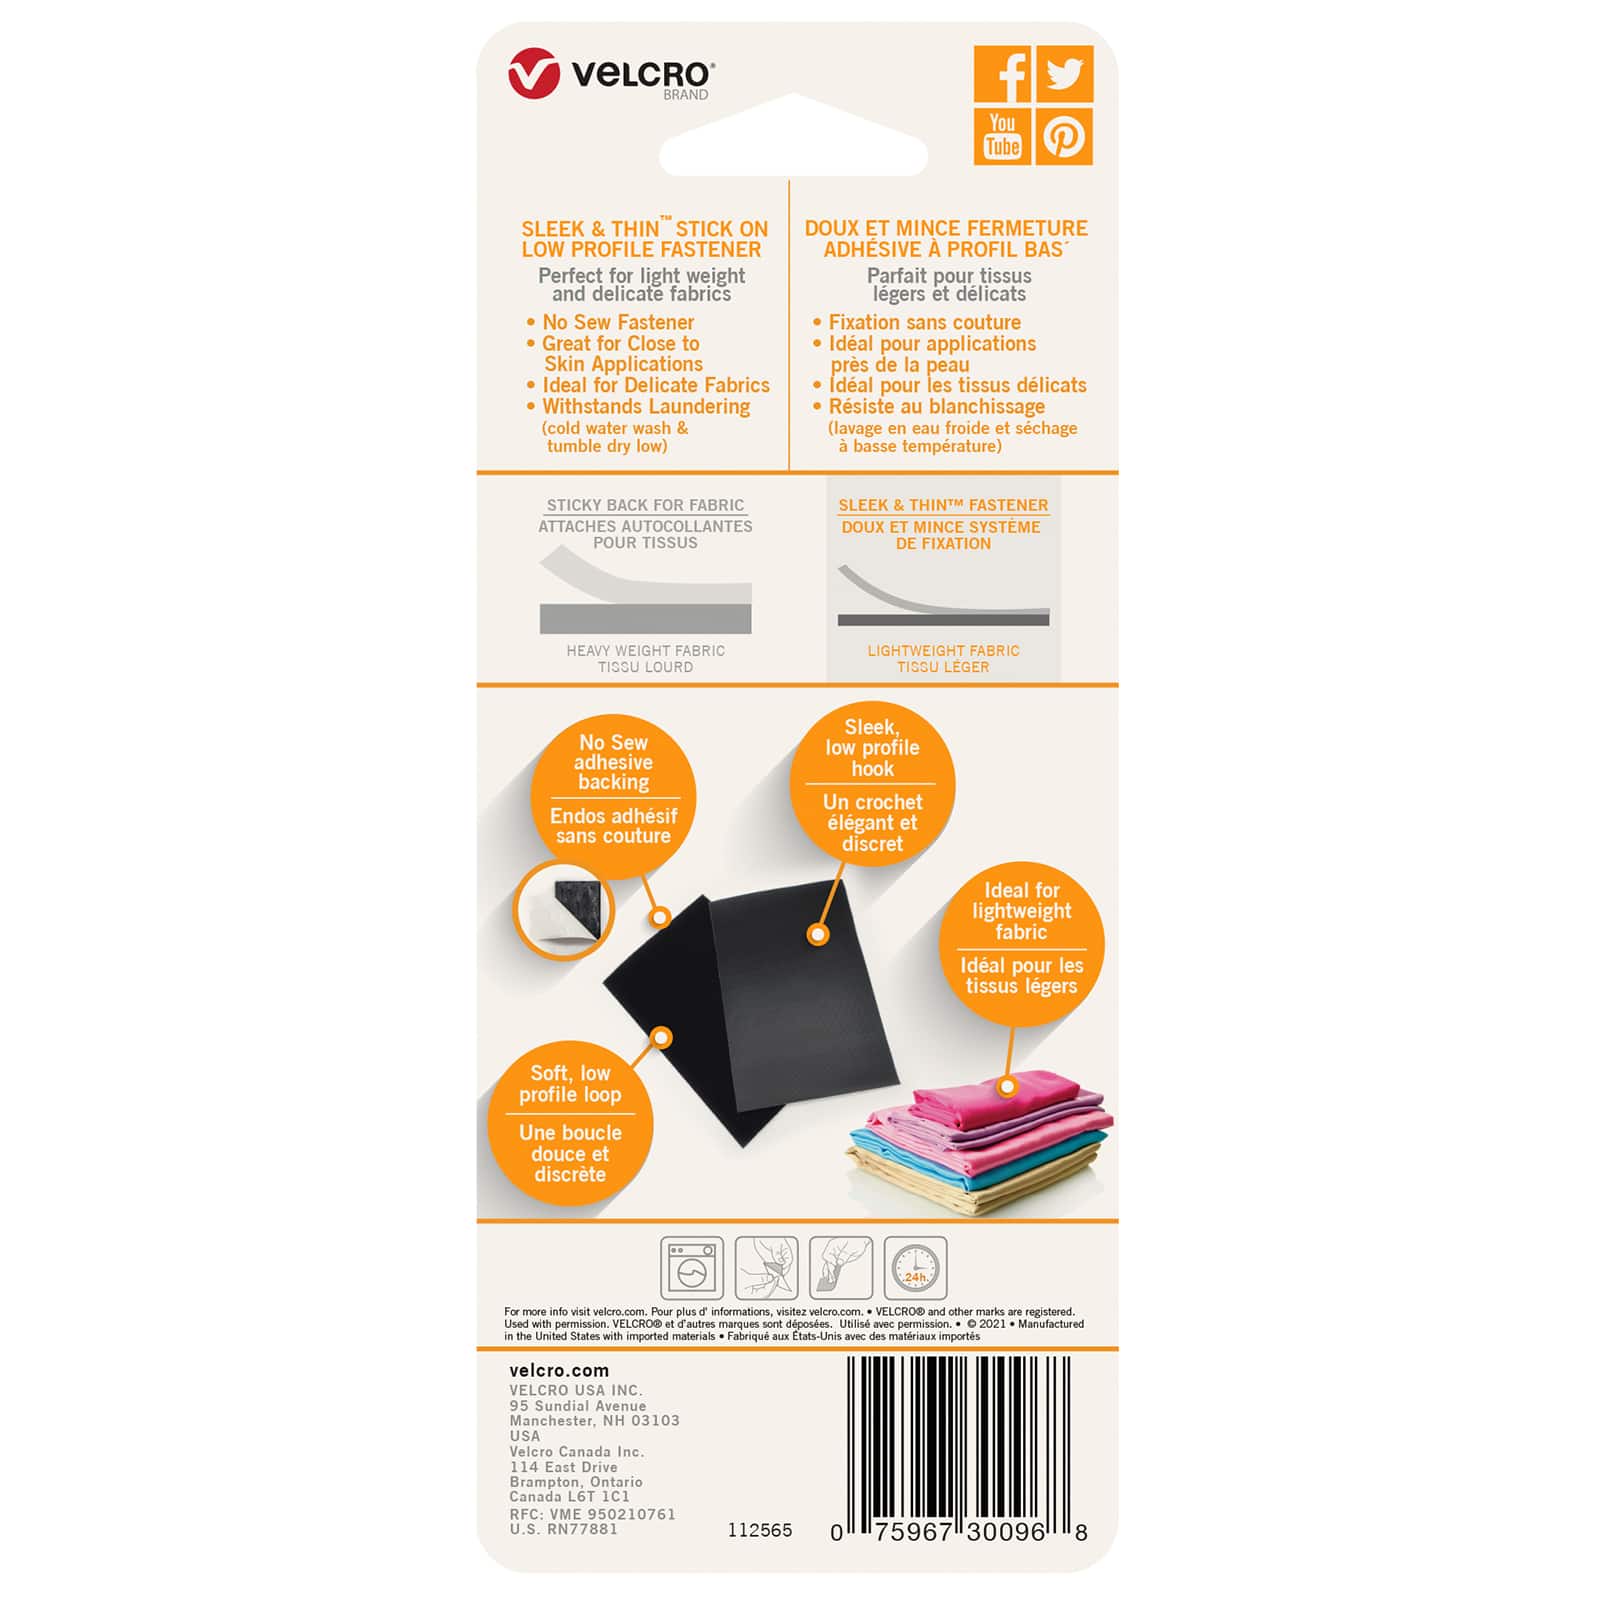 VELCRO® Brand Sticky Back™ for Fabrics Black Tape, 6 x 4 (15.2